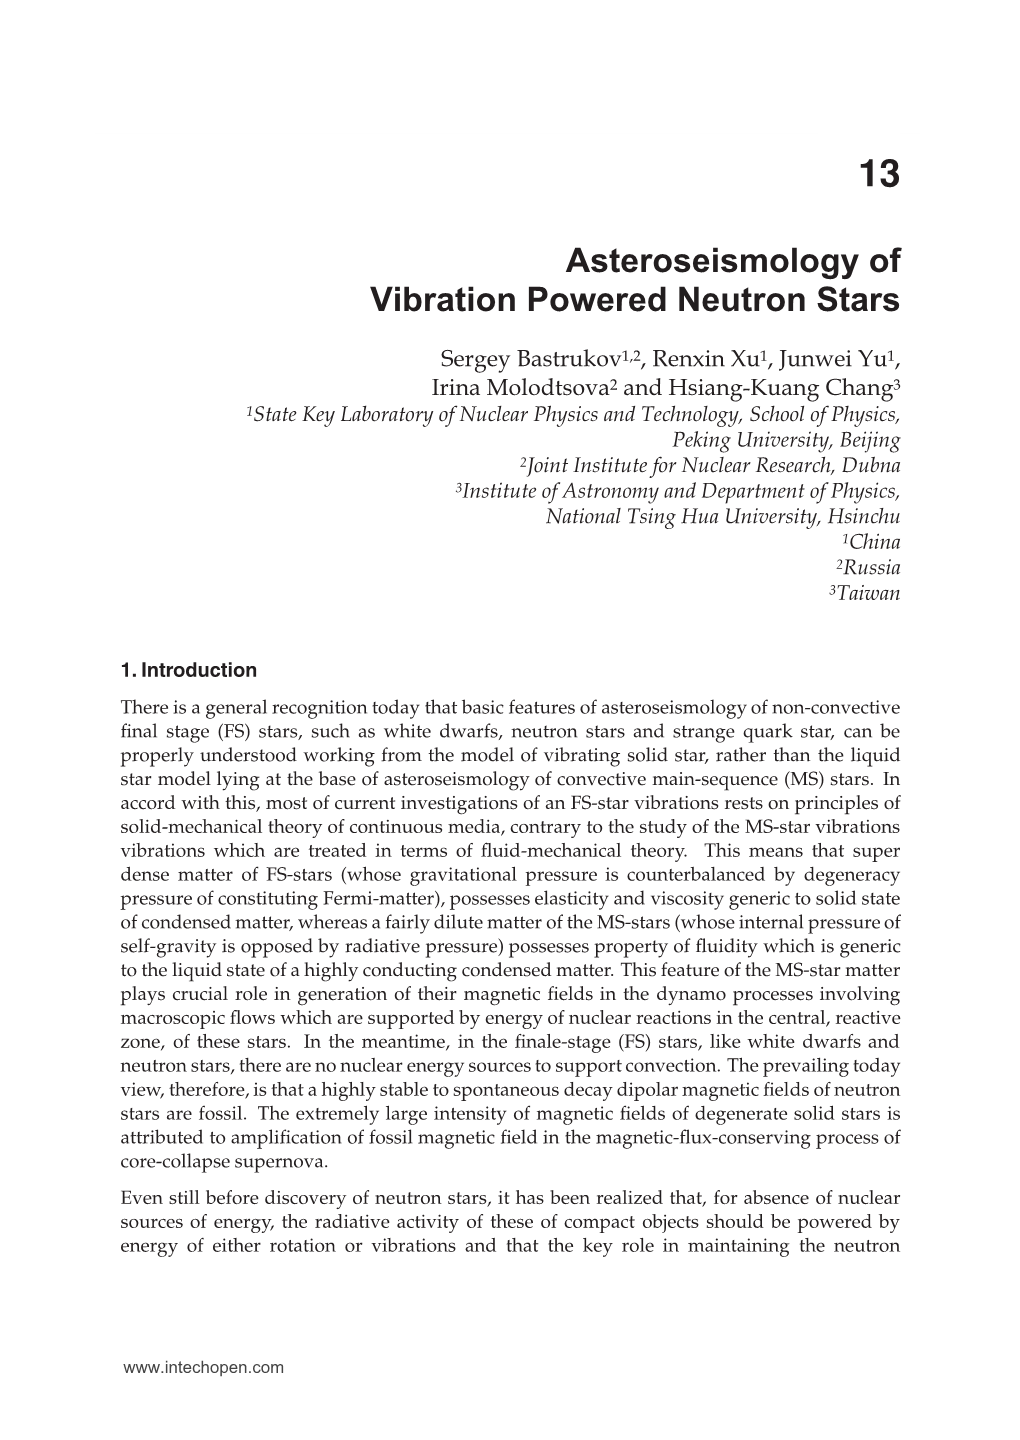 Asteroseismology of Vibration Powered Neutron Stars